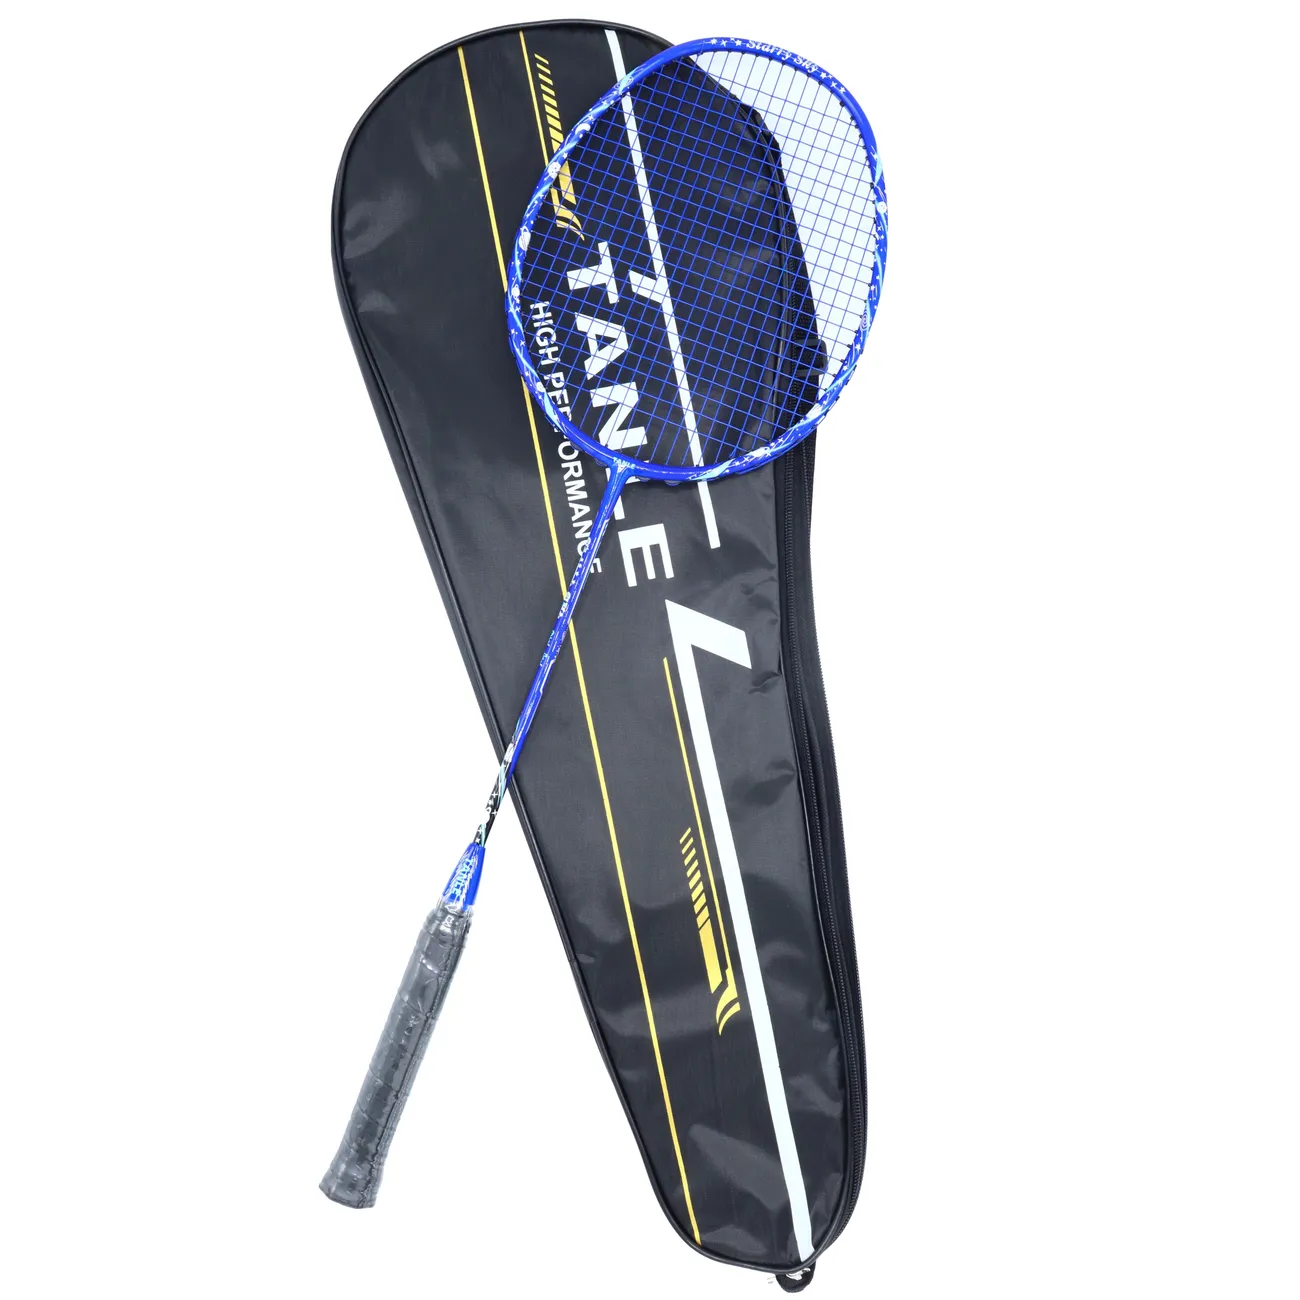 Ultra Light 6u Carbon Fiber Badminton Racquet - Starry Sky Design For Professional Play